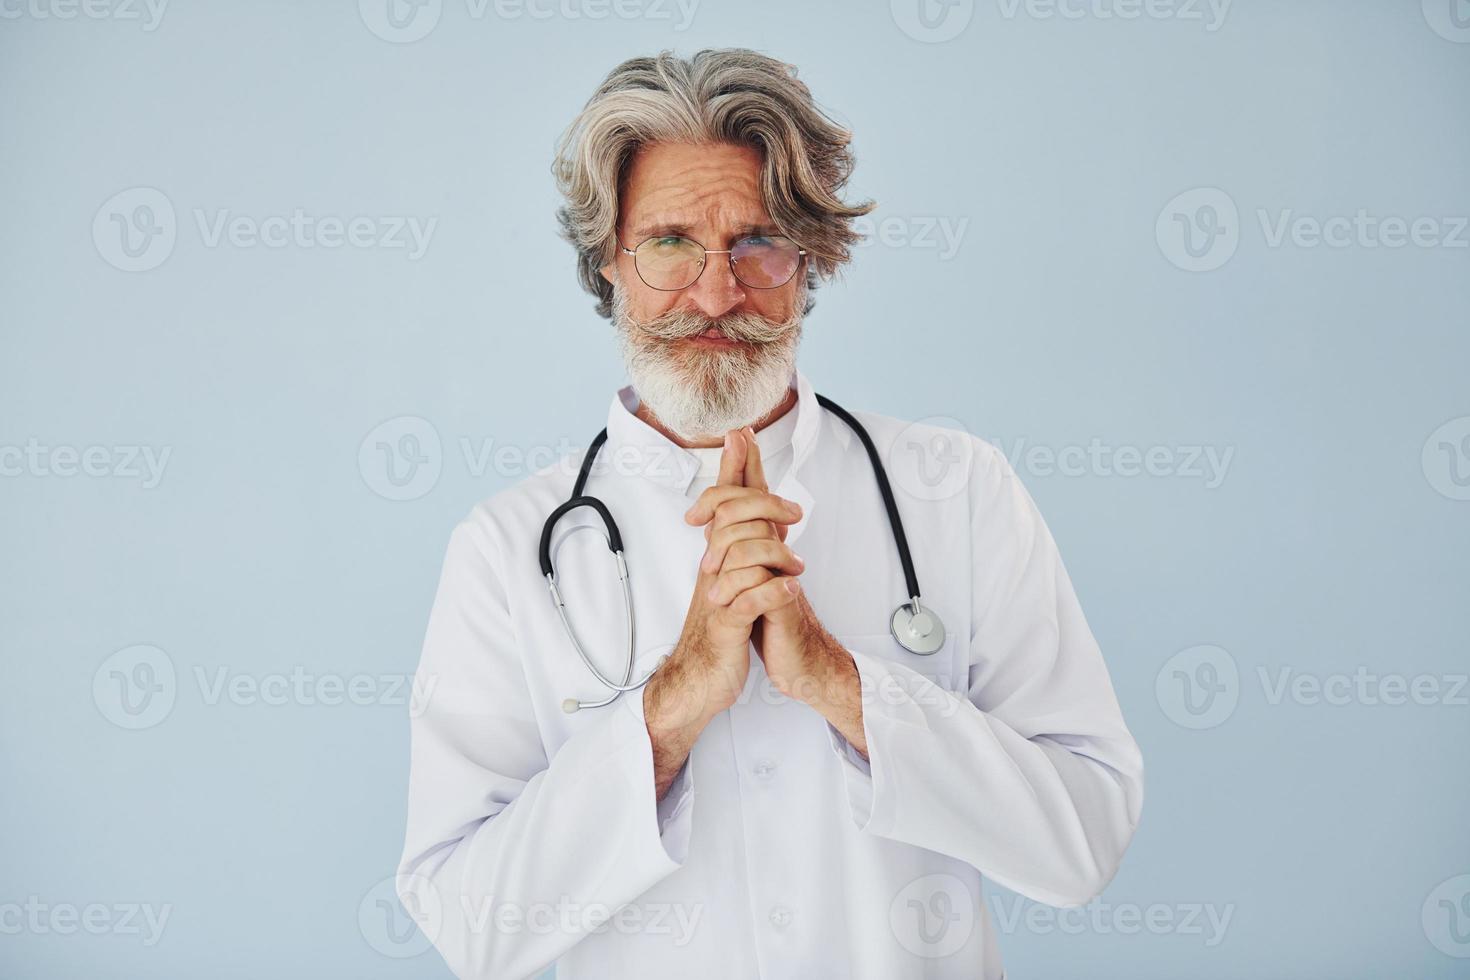 Professional positive doctor. Senior stylish modern man with grey hair and beard indoors photo